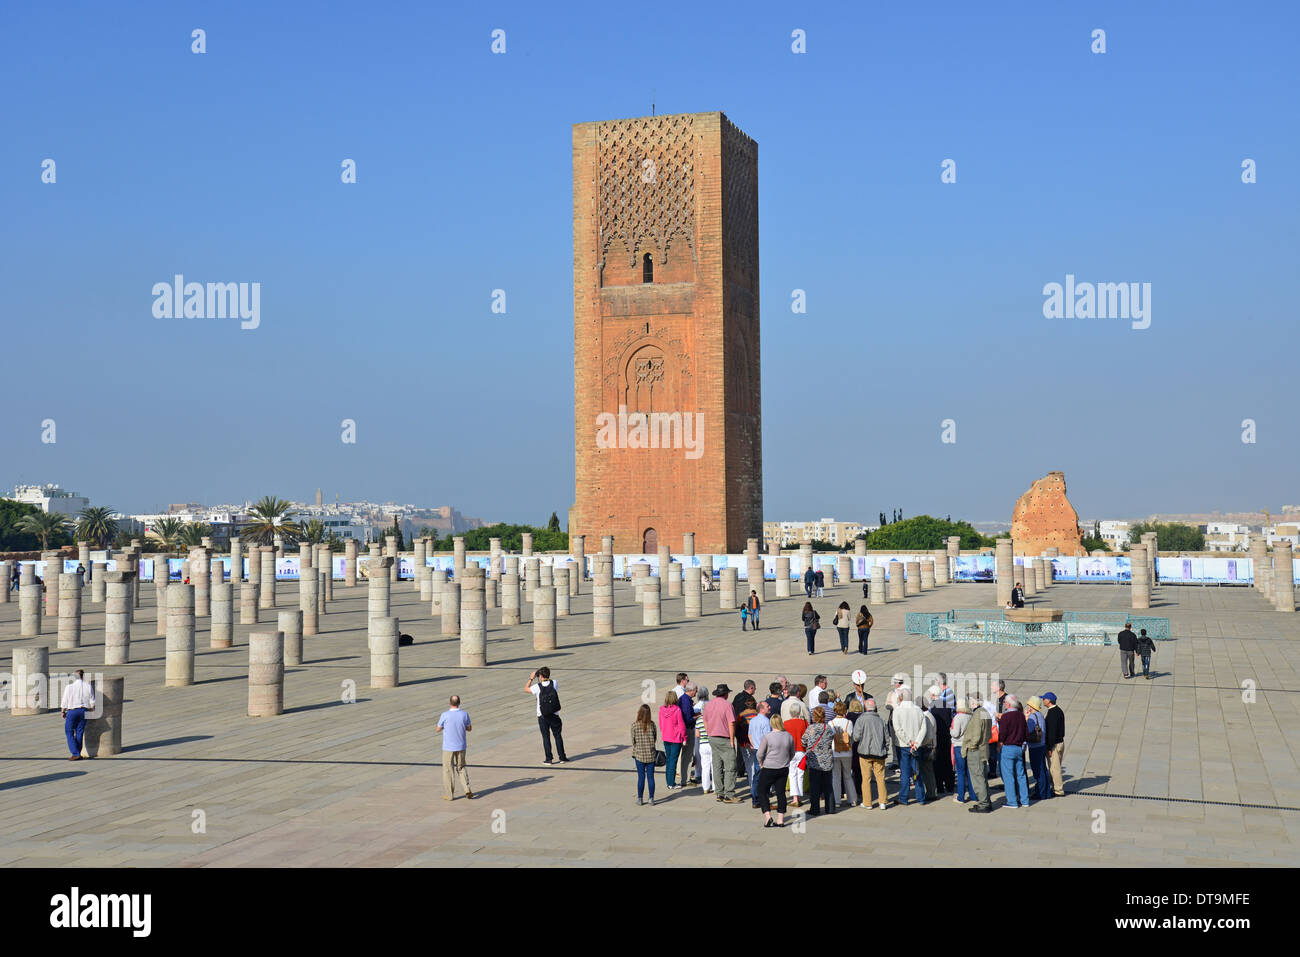 Torre Hassan (Tour Hassan), Boulevard Mohamed Lyazidi, Rabat, Rabat-Salé-Zemmour-Zaer regione, il Regno del Marocco Foto Stock